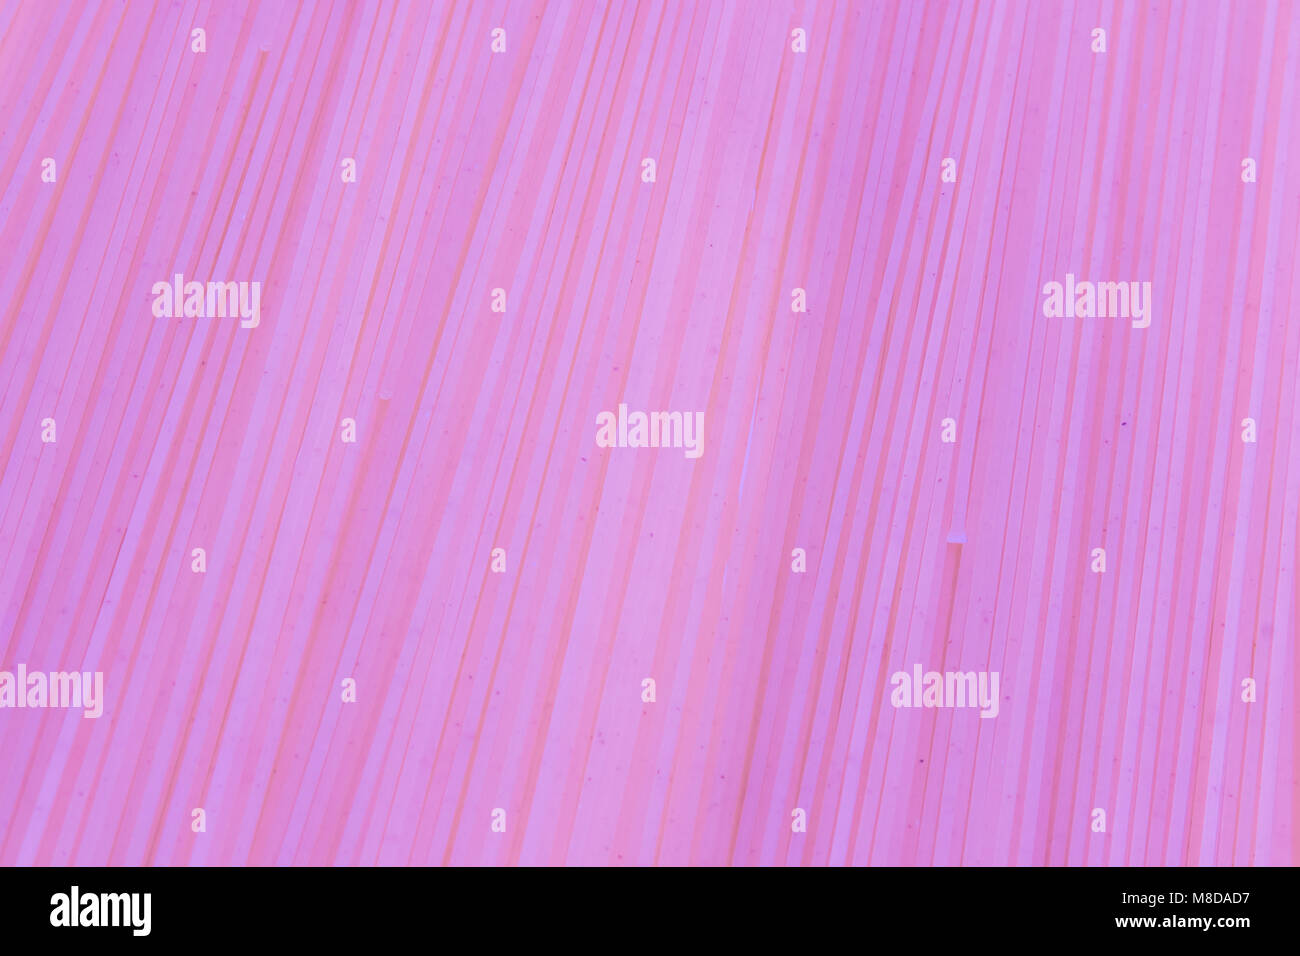 Pink raw spaghetti line background, Stock Photo